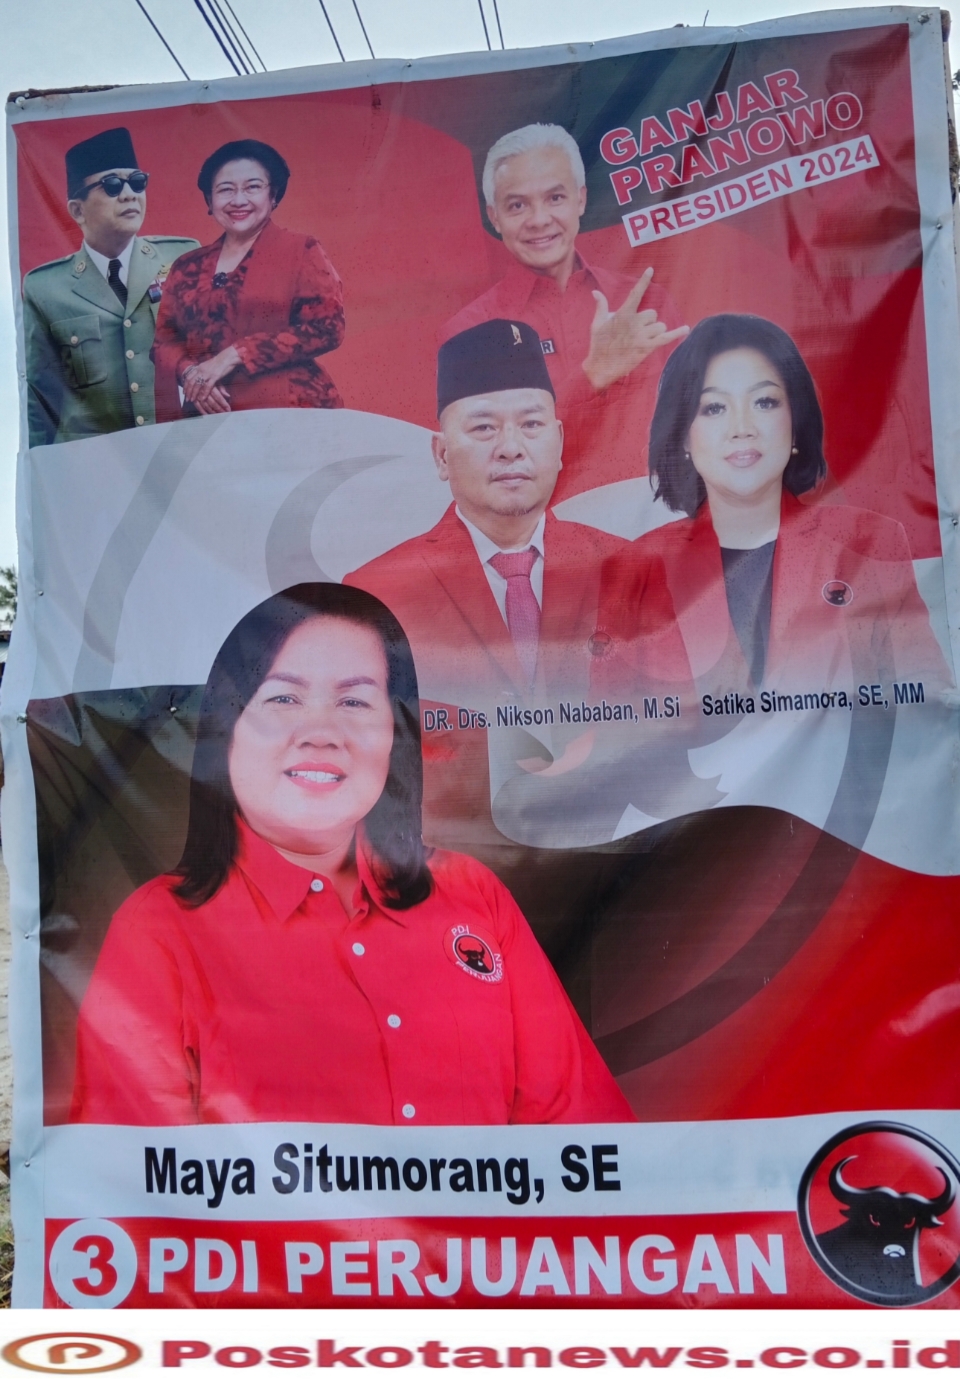 Maya Situmorang : Politik Cenderung Masih Patriarki